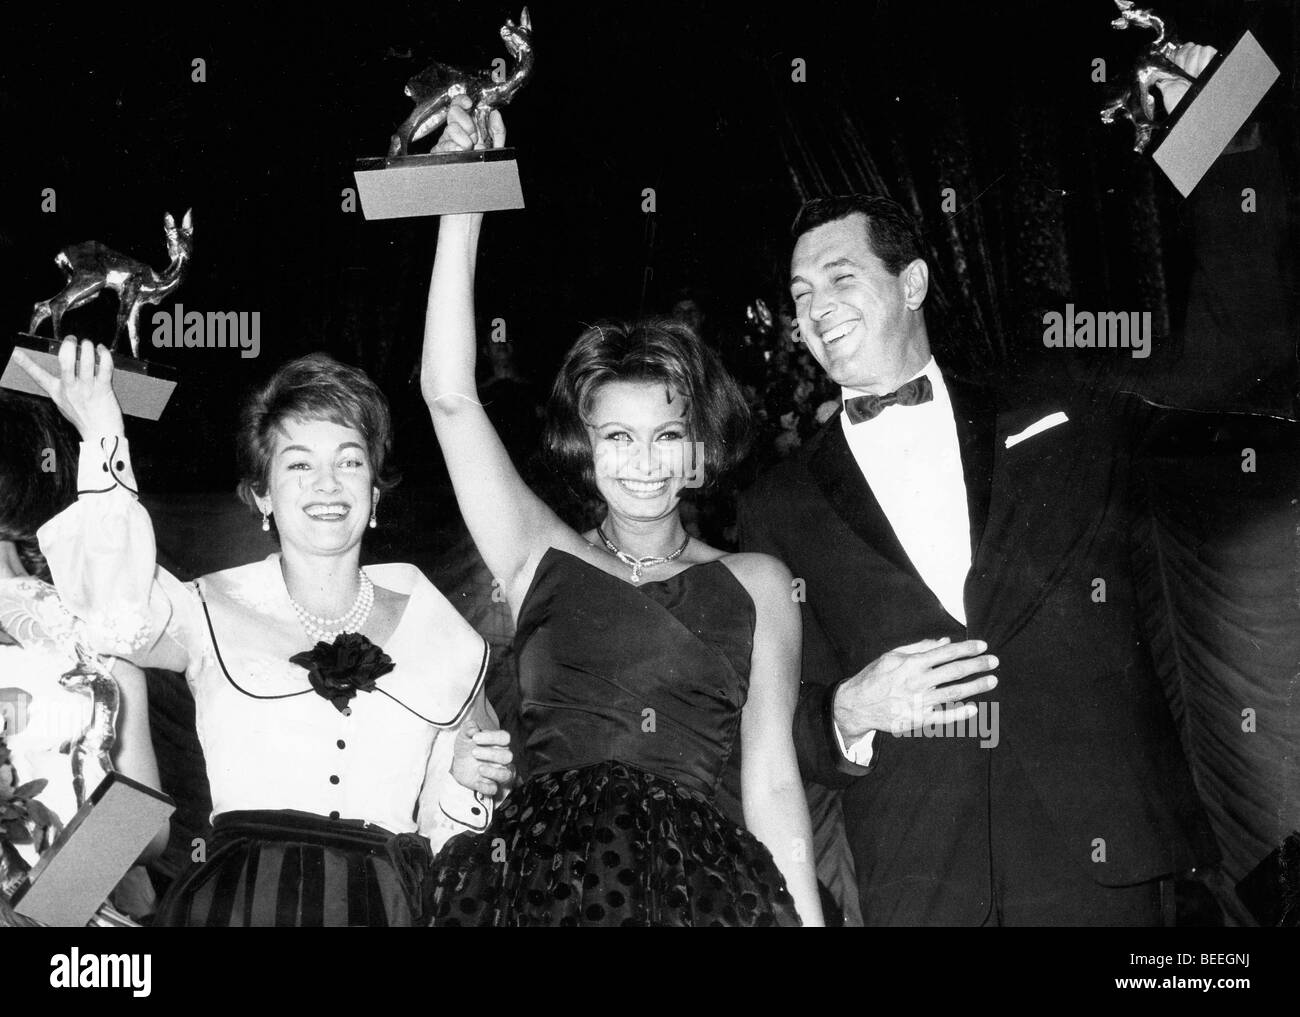 Attrice Sophia Loren vince a Bambi Awards Foto stock - Alamy